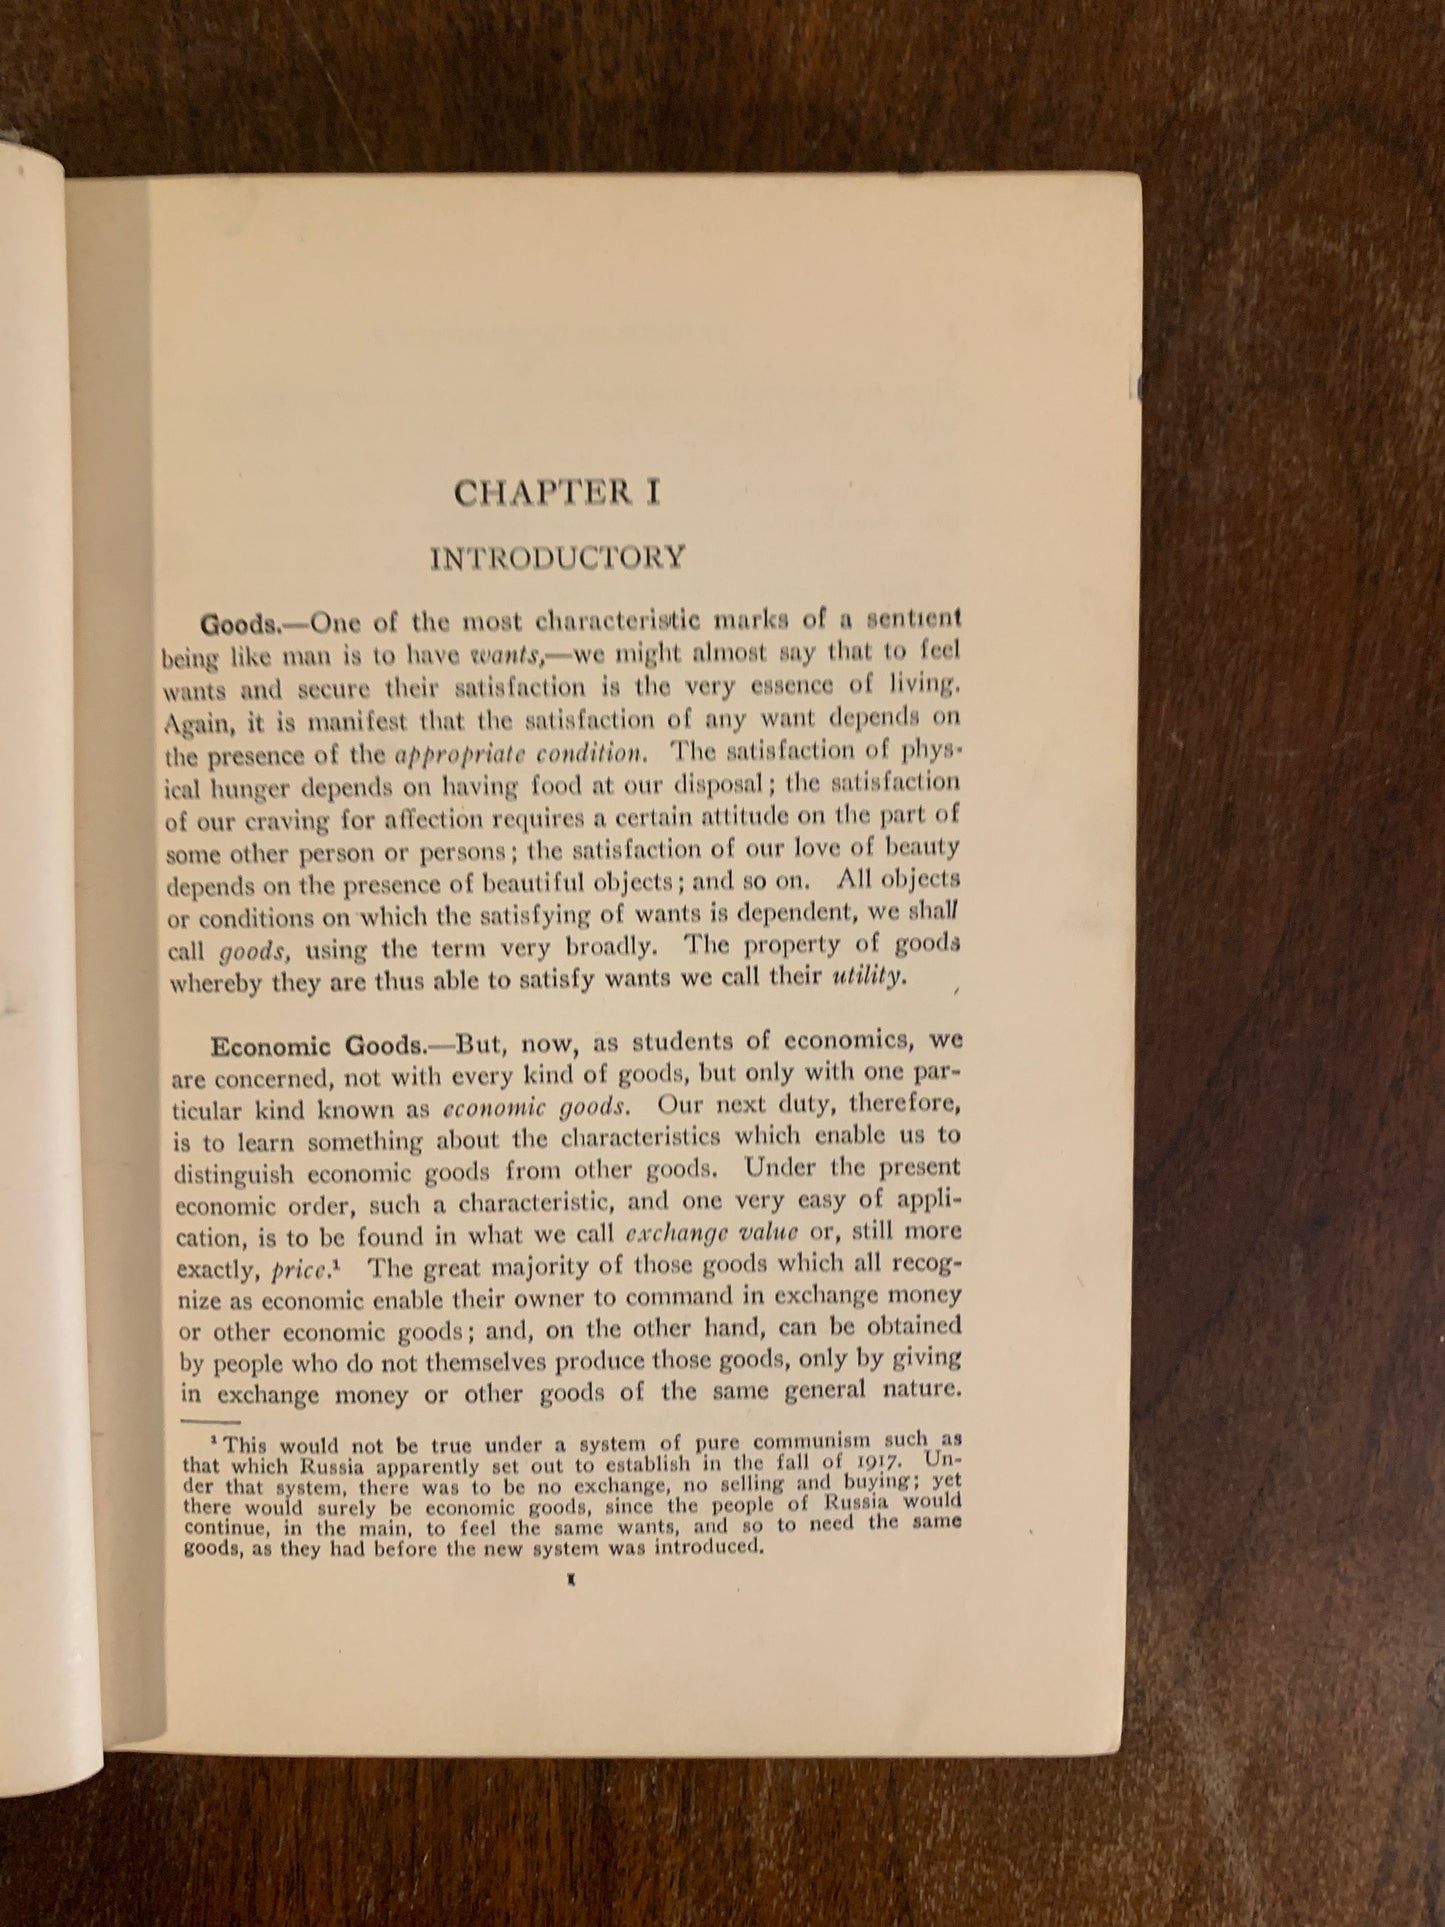 Principles of Economics by F.M. Taylor 1937